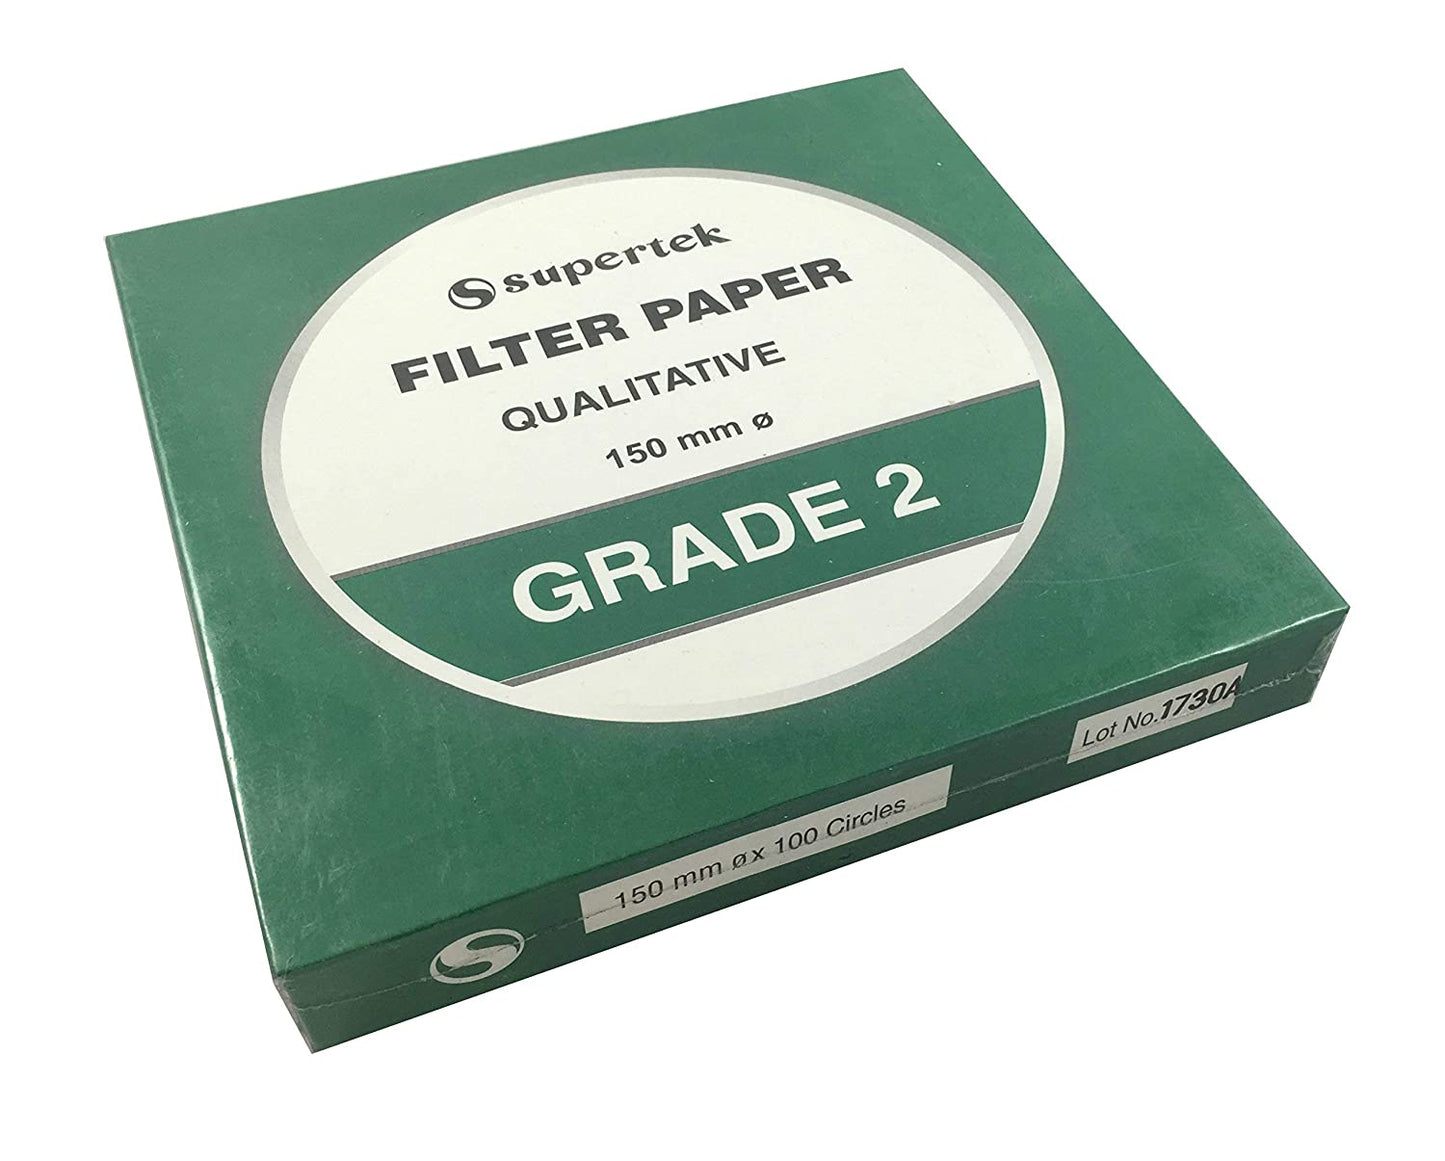 Filter Paper, Qualitative, Grade 2, 150 mm (Diameter) Pack of 100 Sheets